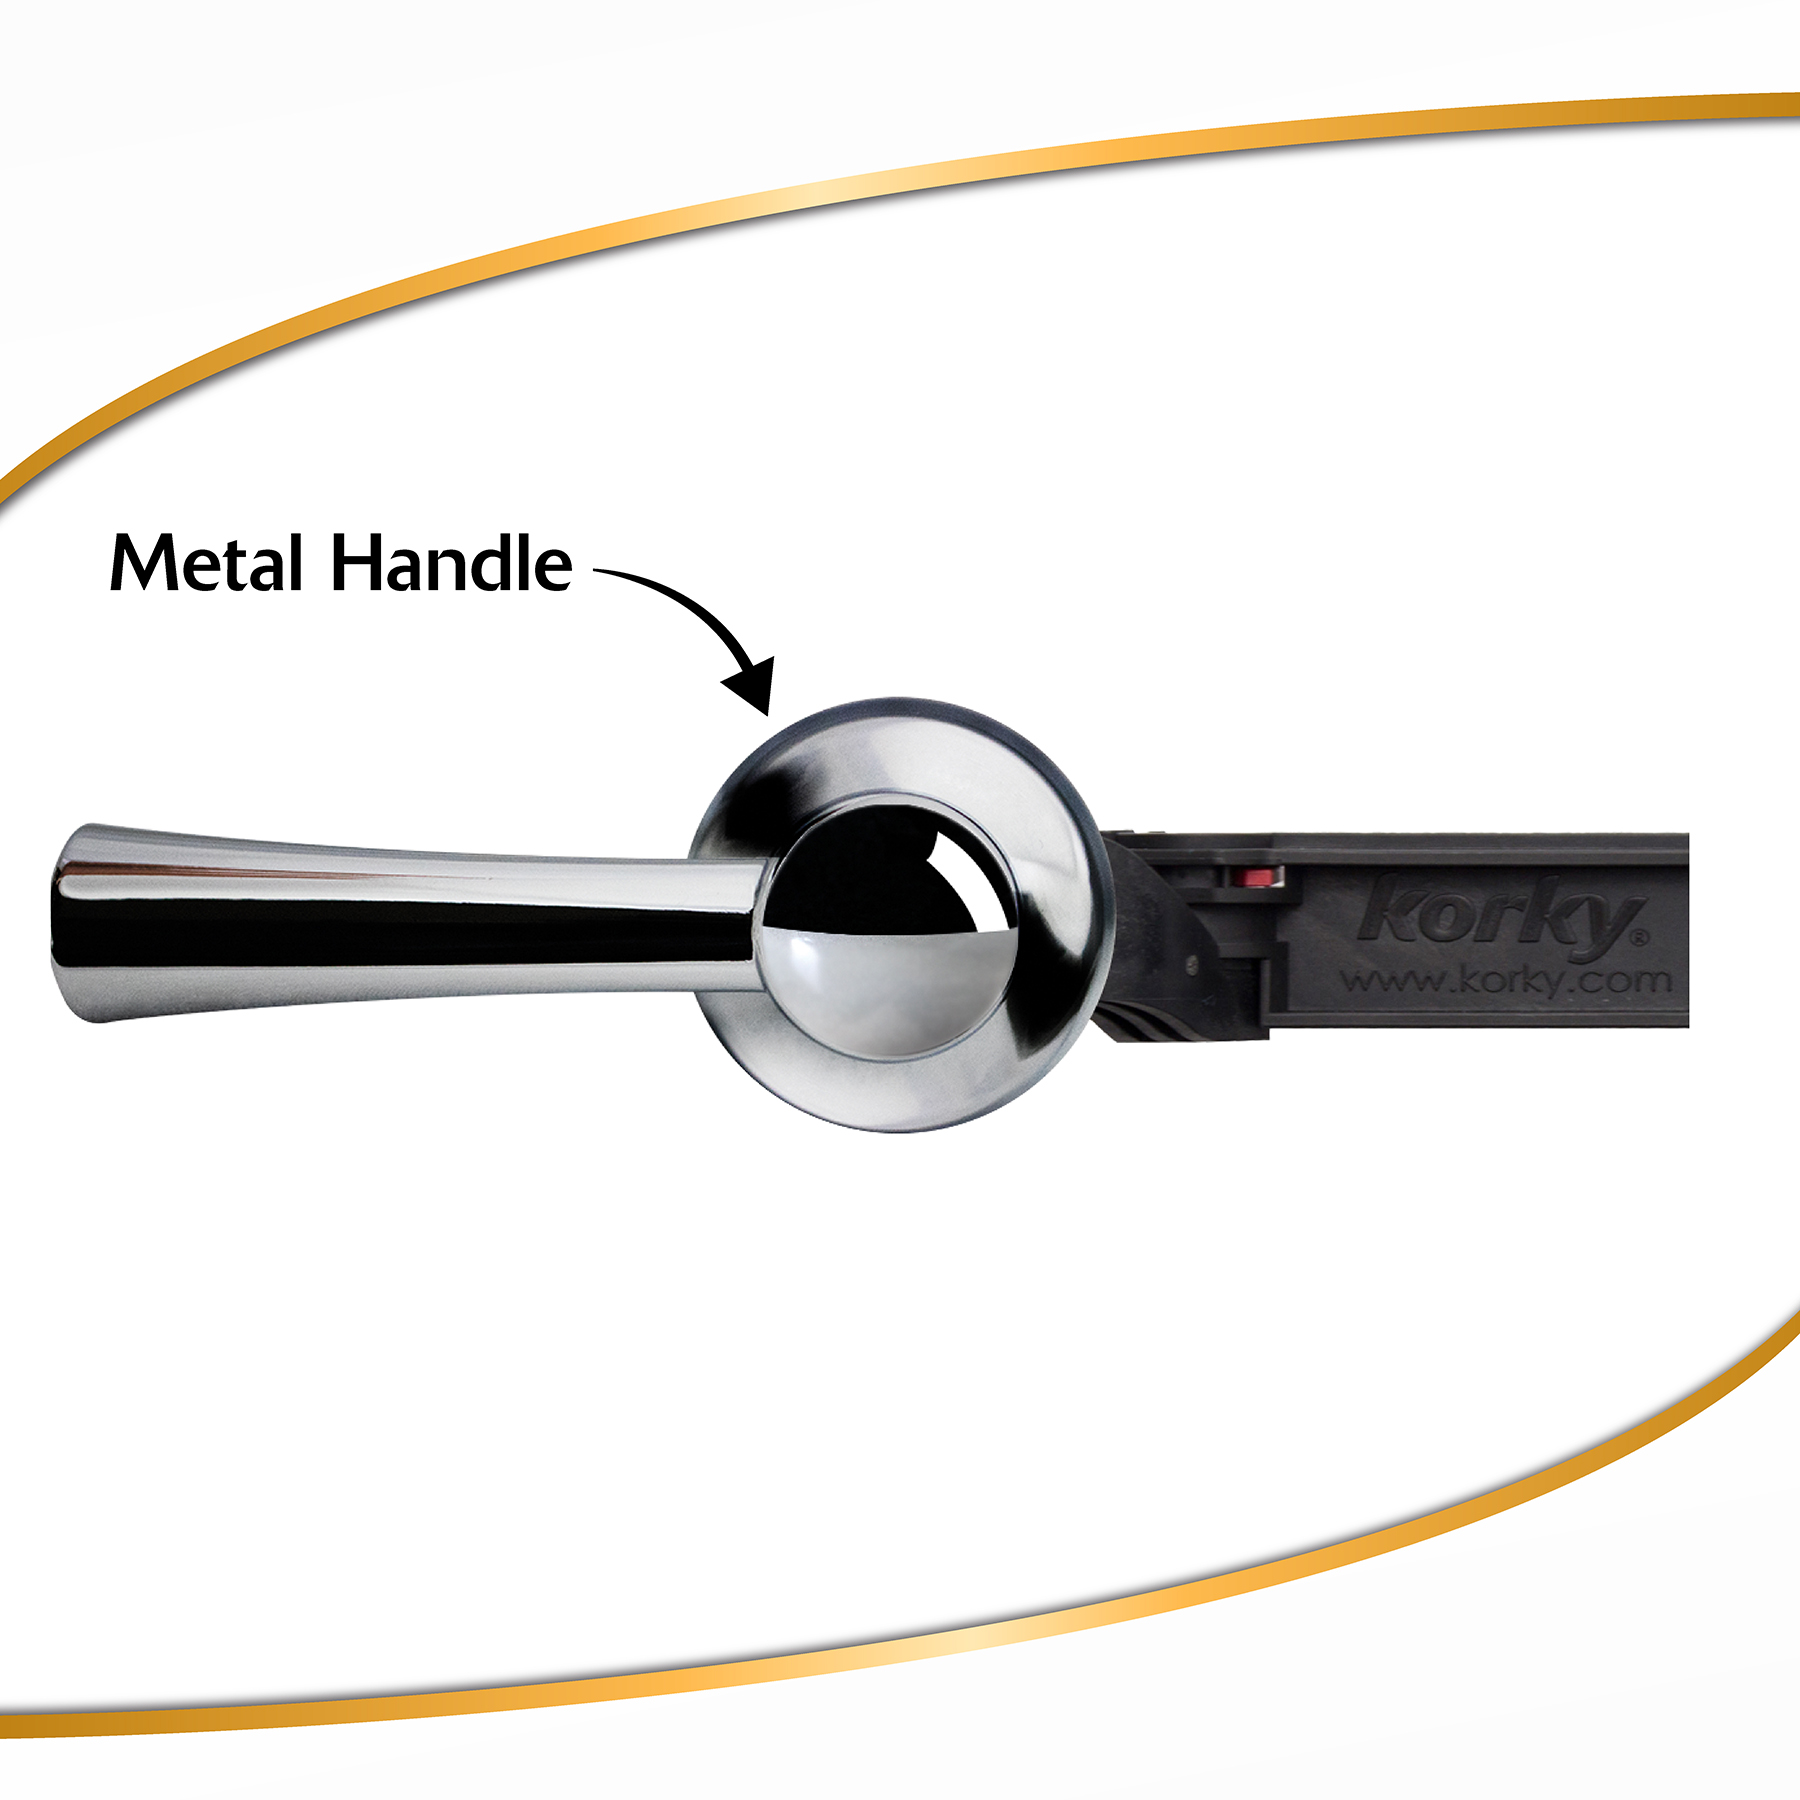 Metal Chrome flush handle